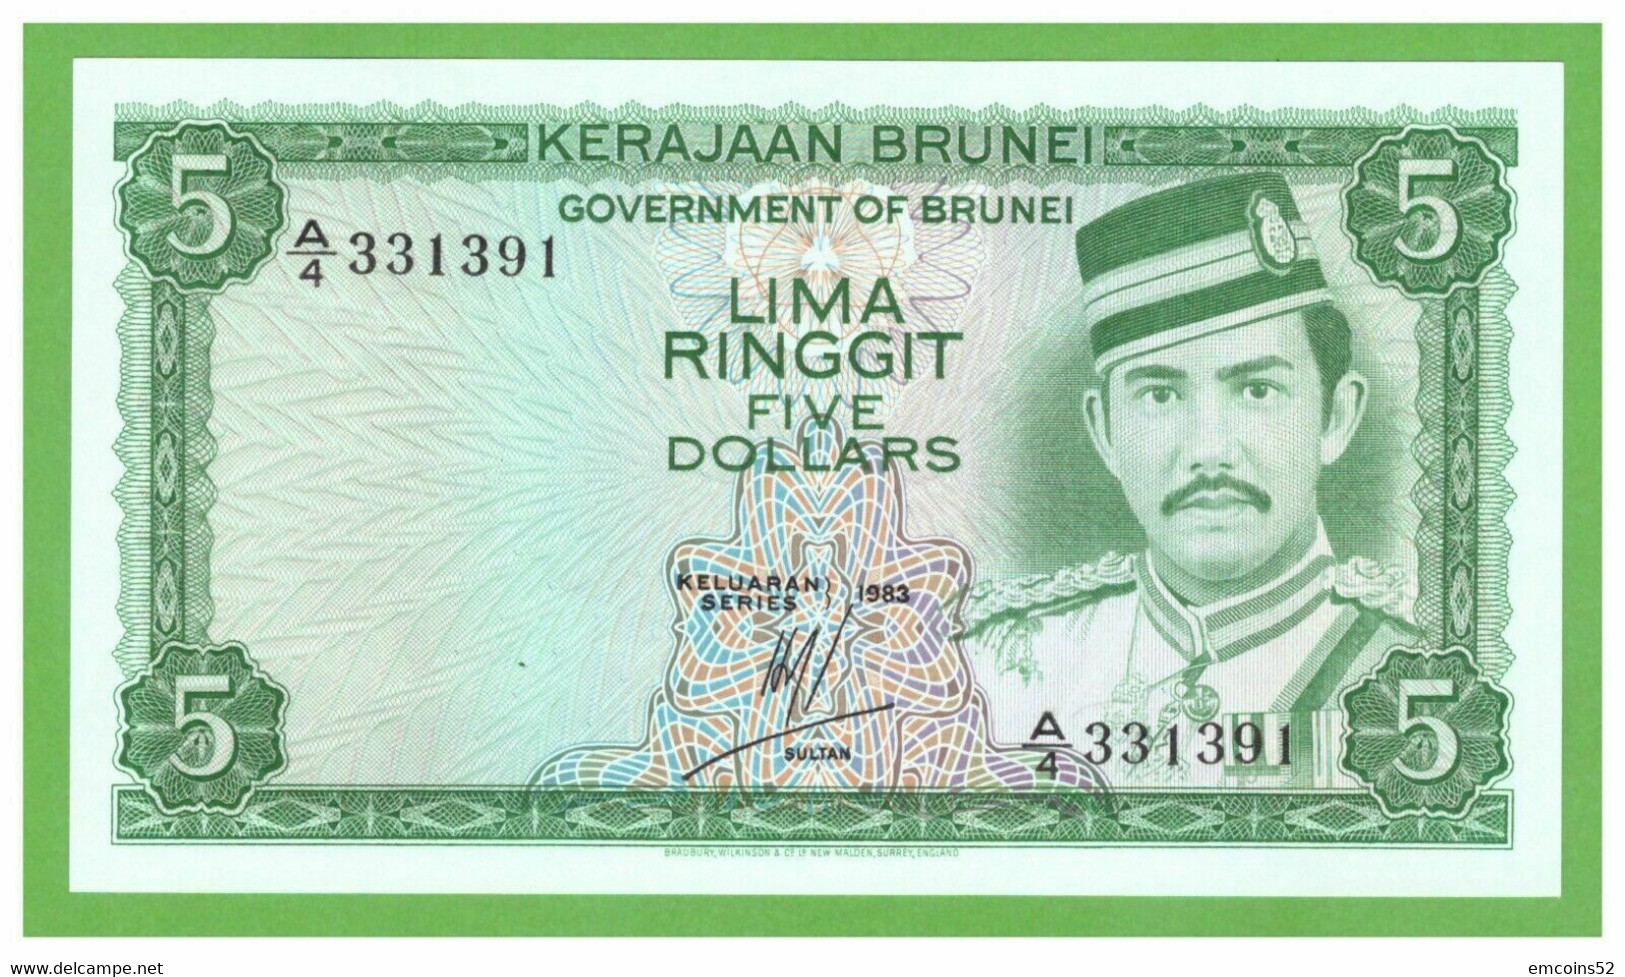 BRUNEI 5 DOLLARS 1983  P-7b  UNC - Brunei